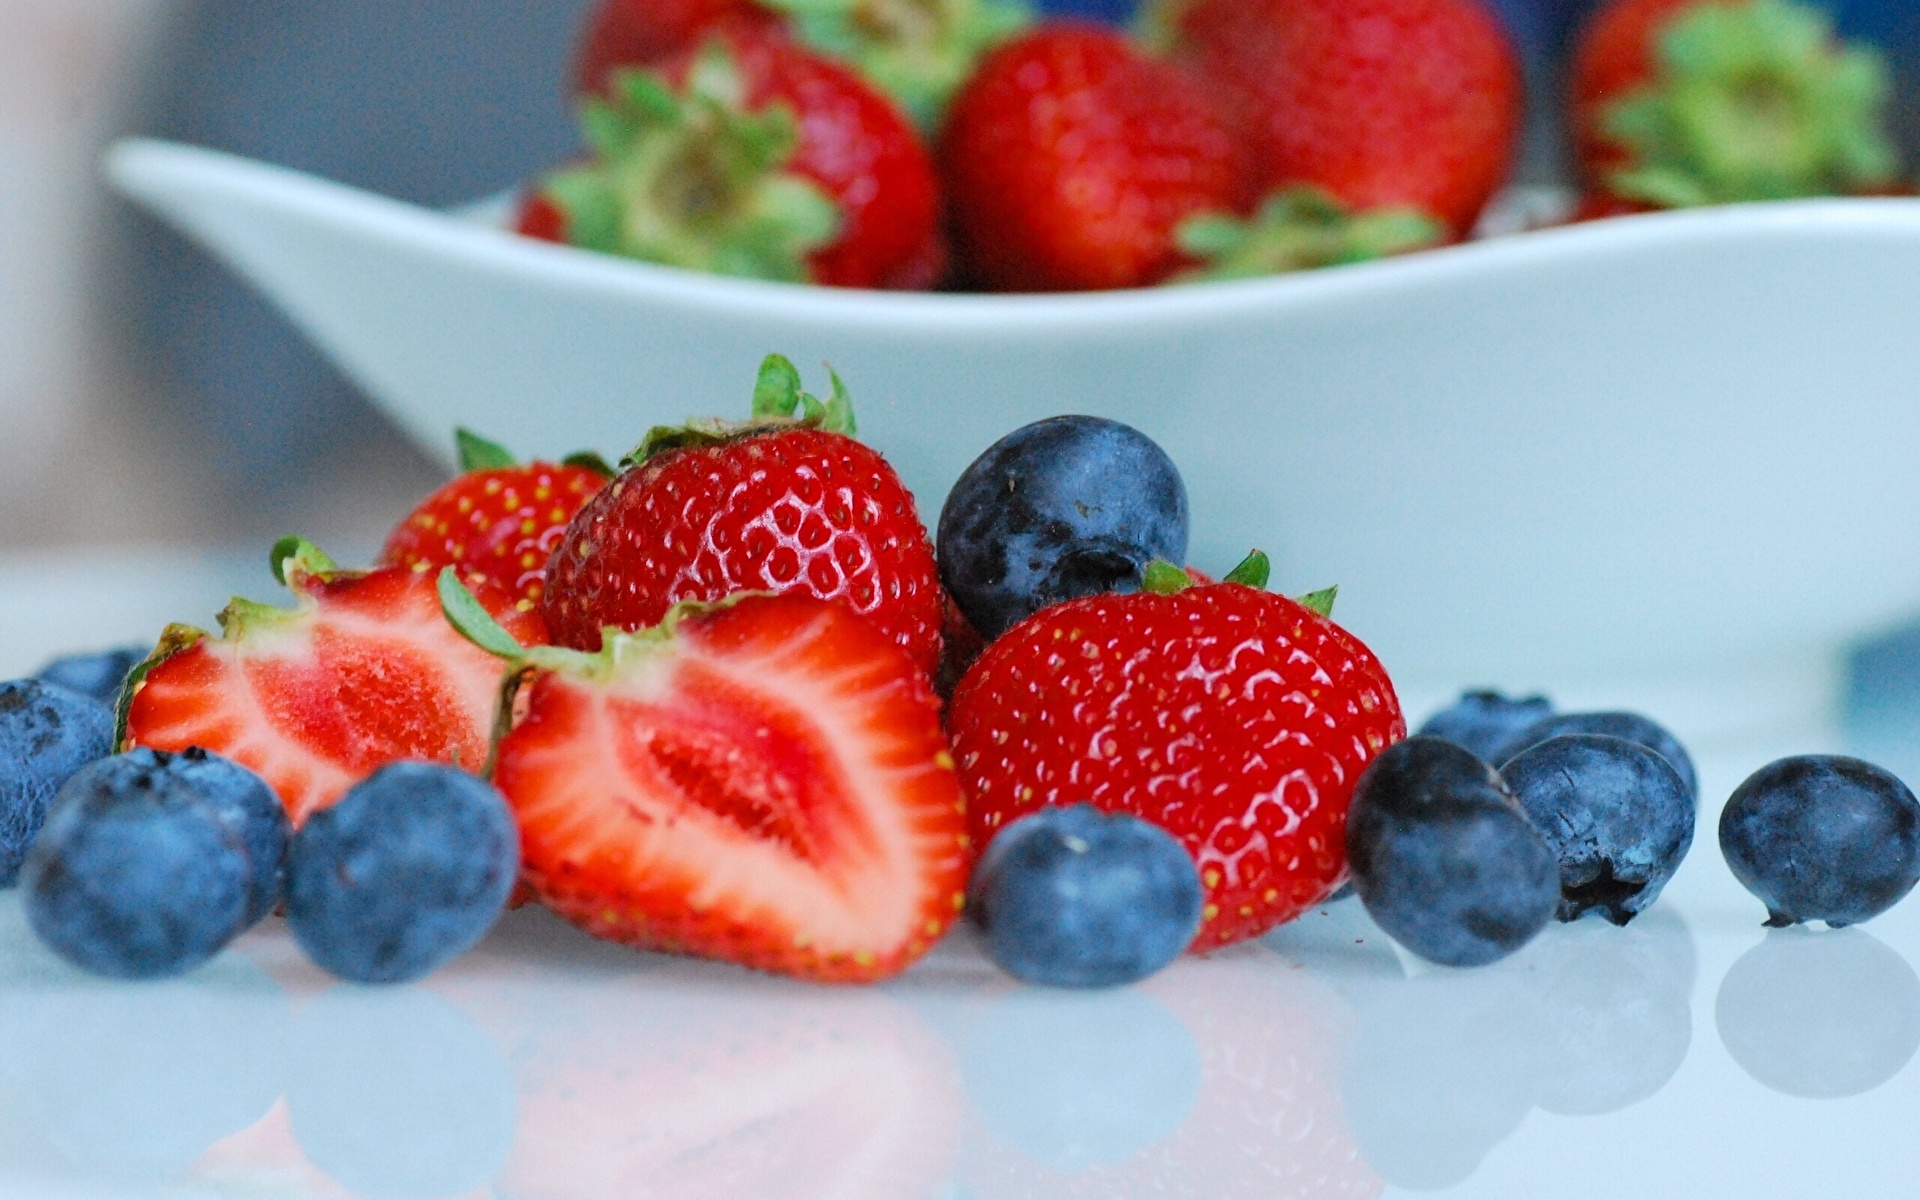 еда киви фрукты клубника черника смородина земляника банан food kiwi fruit strawberry blueberries currant strawberries banana бесплатно